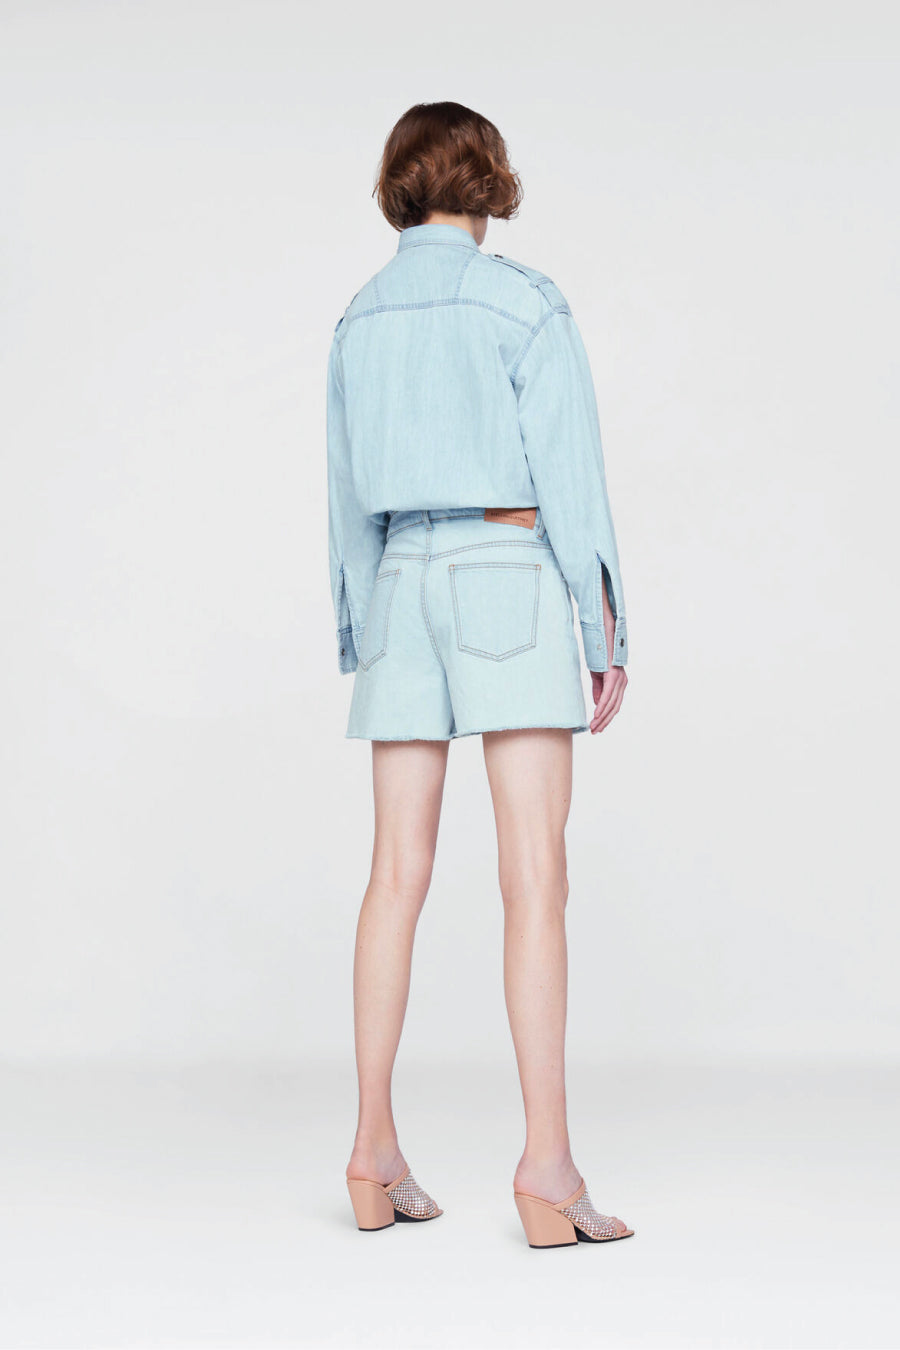 Stella McCartney Star Skinny Grazer Organic Cotton Jeans Size 31 $495 | eBay